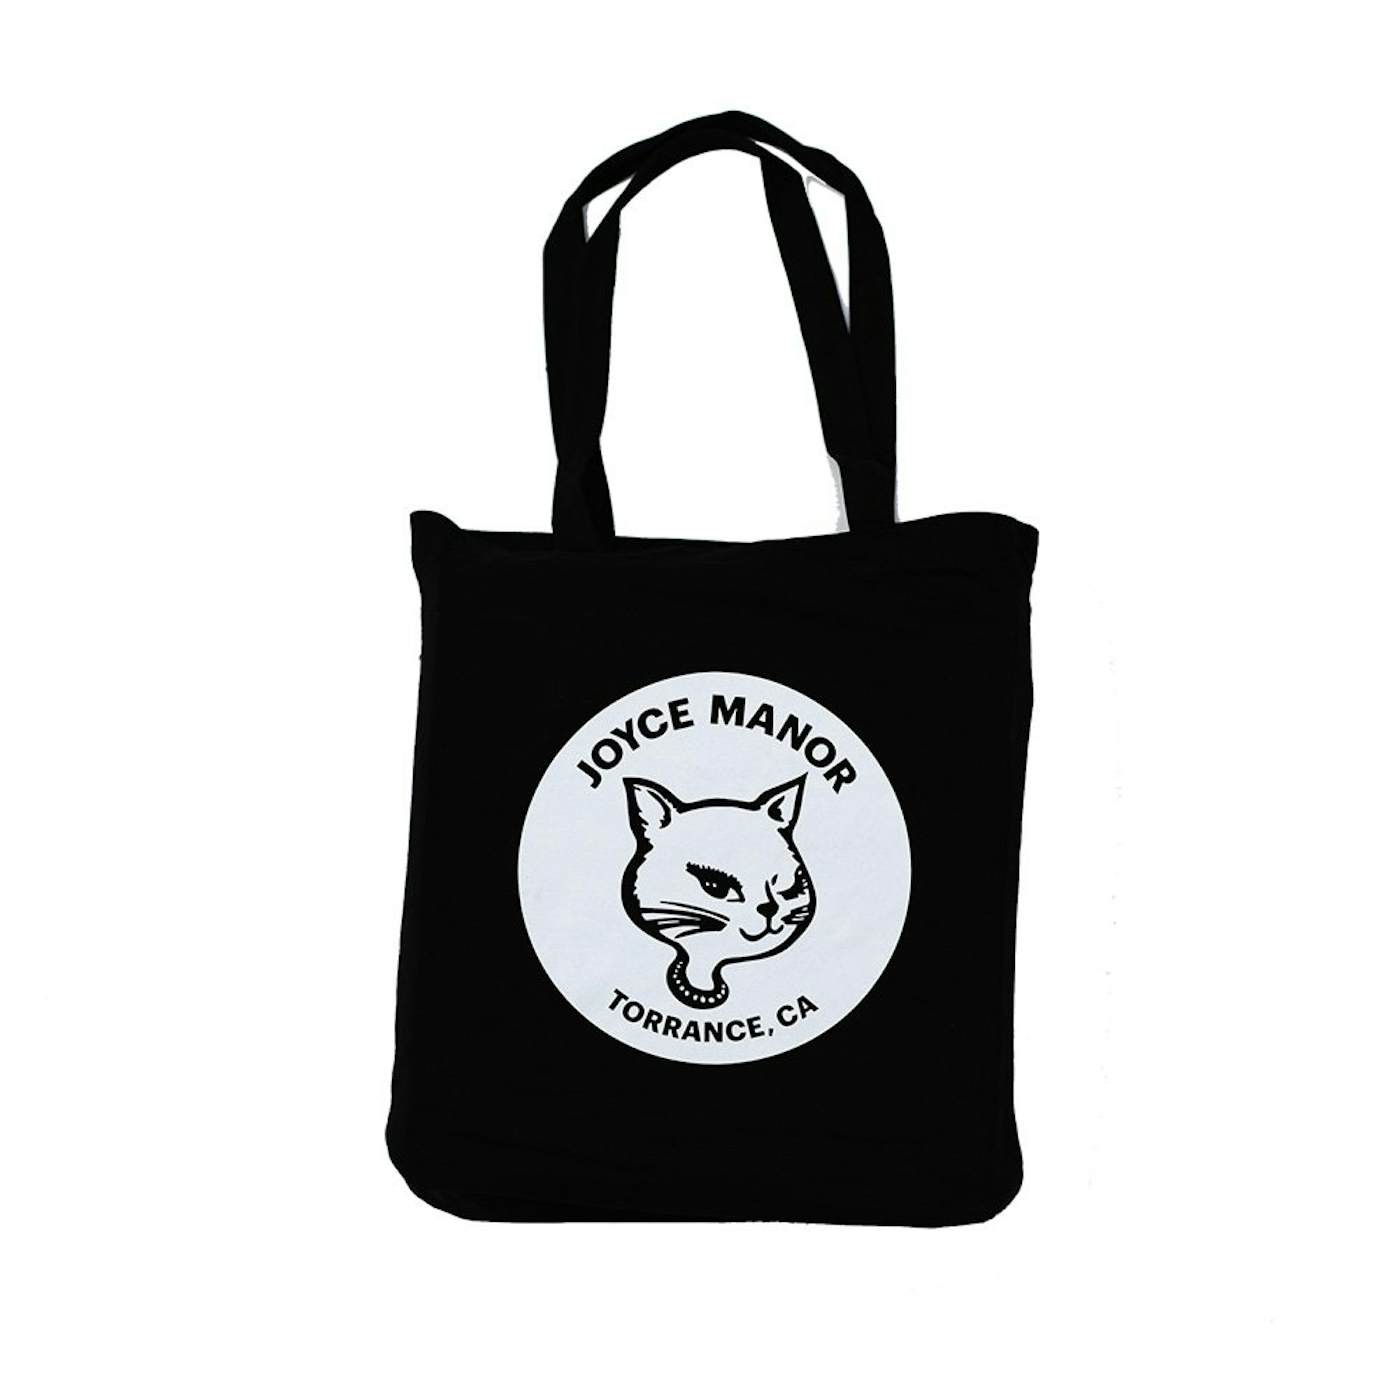 Joyce Manor Winking Cat Tote Bag (Black)